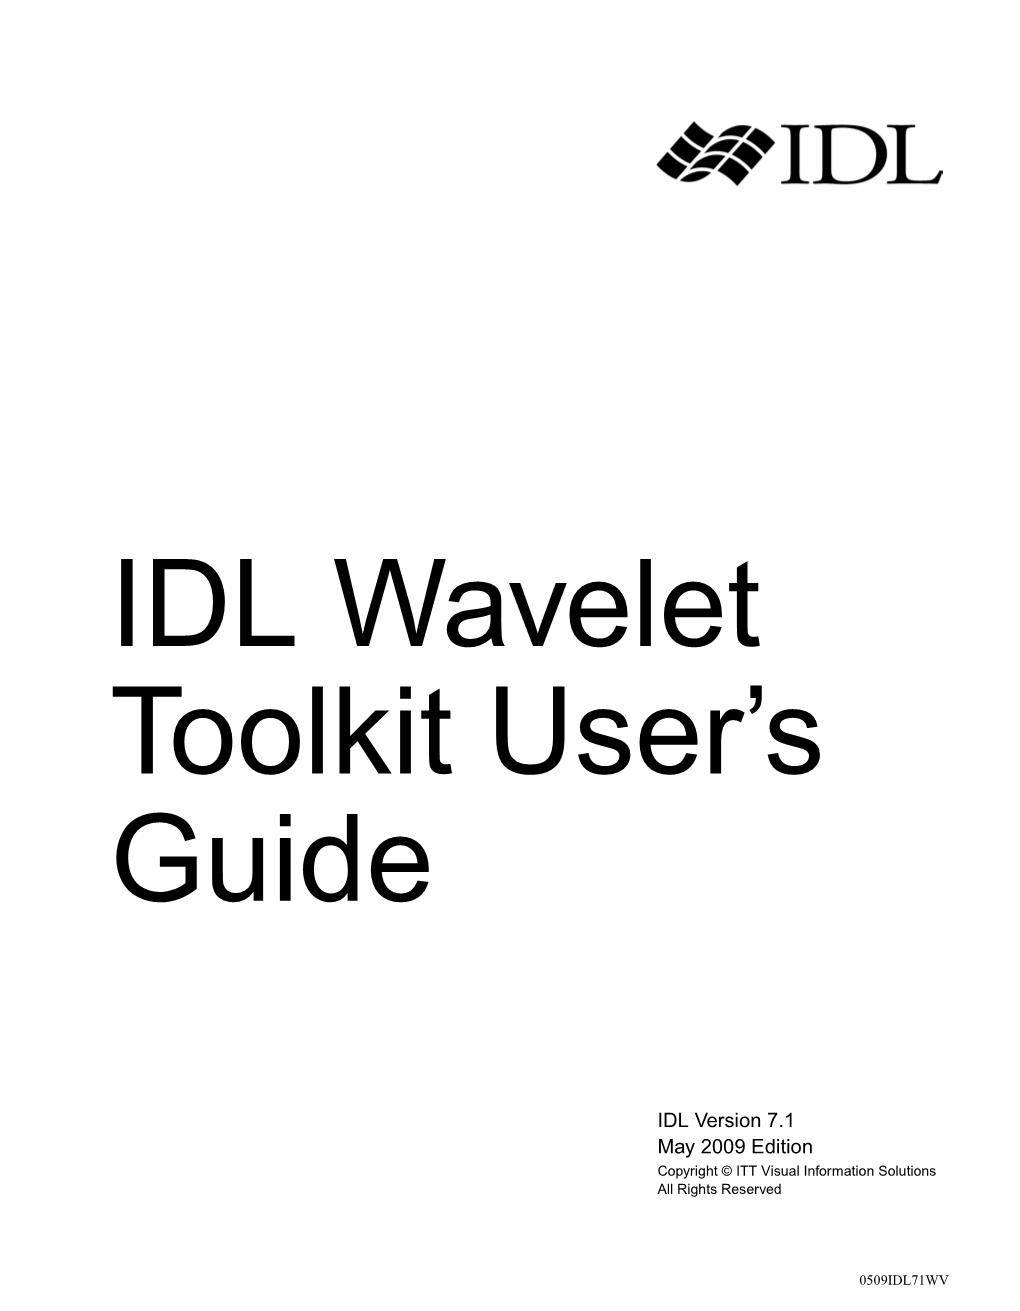 IDL Wavelet Toolkit User's Guide